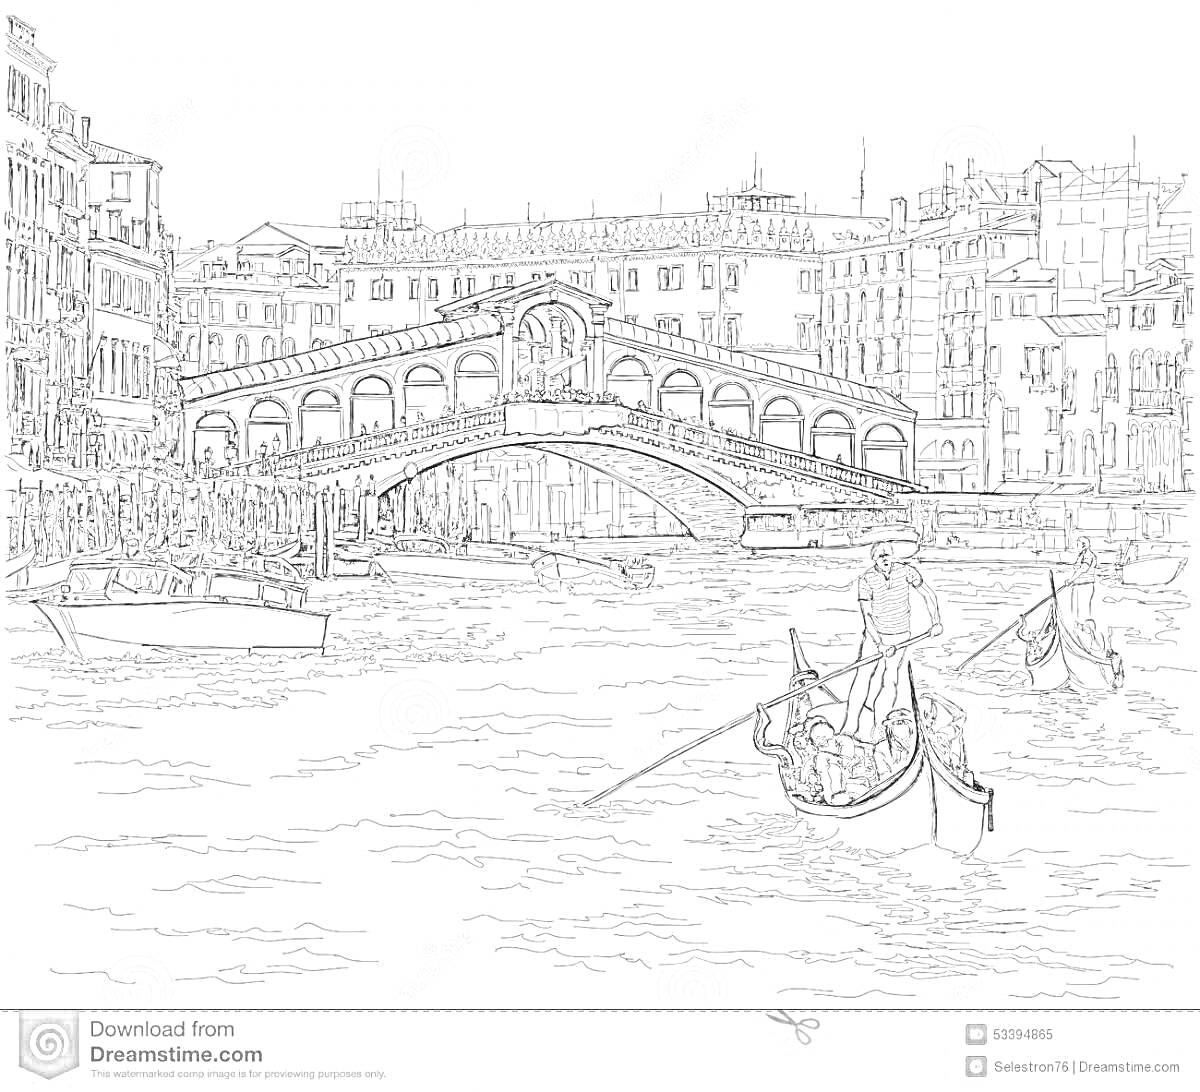 На раскраске изображено: Венеция, Архитектура, Река, Здания, Европа, Пейзаж, Путешествия, Города